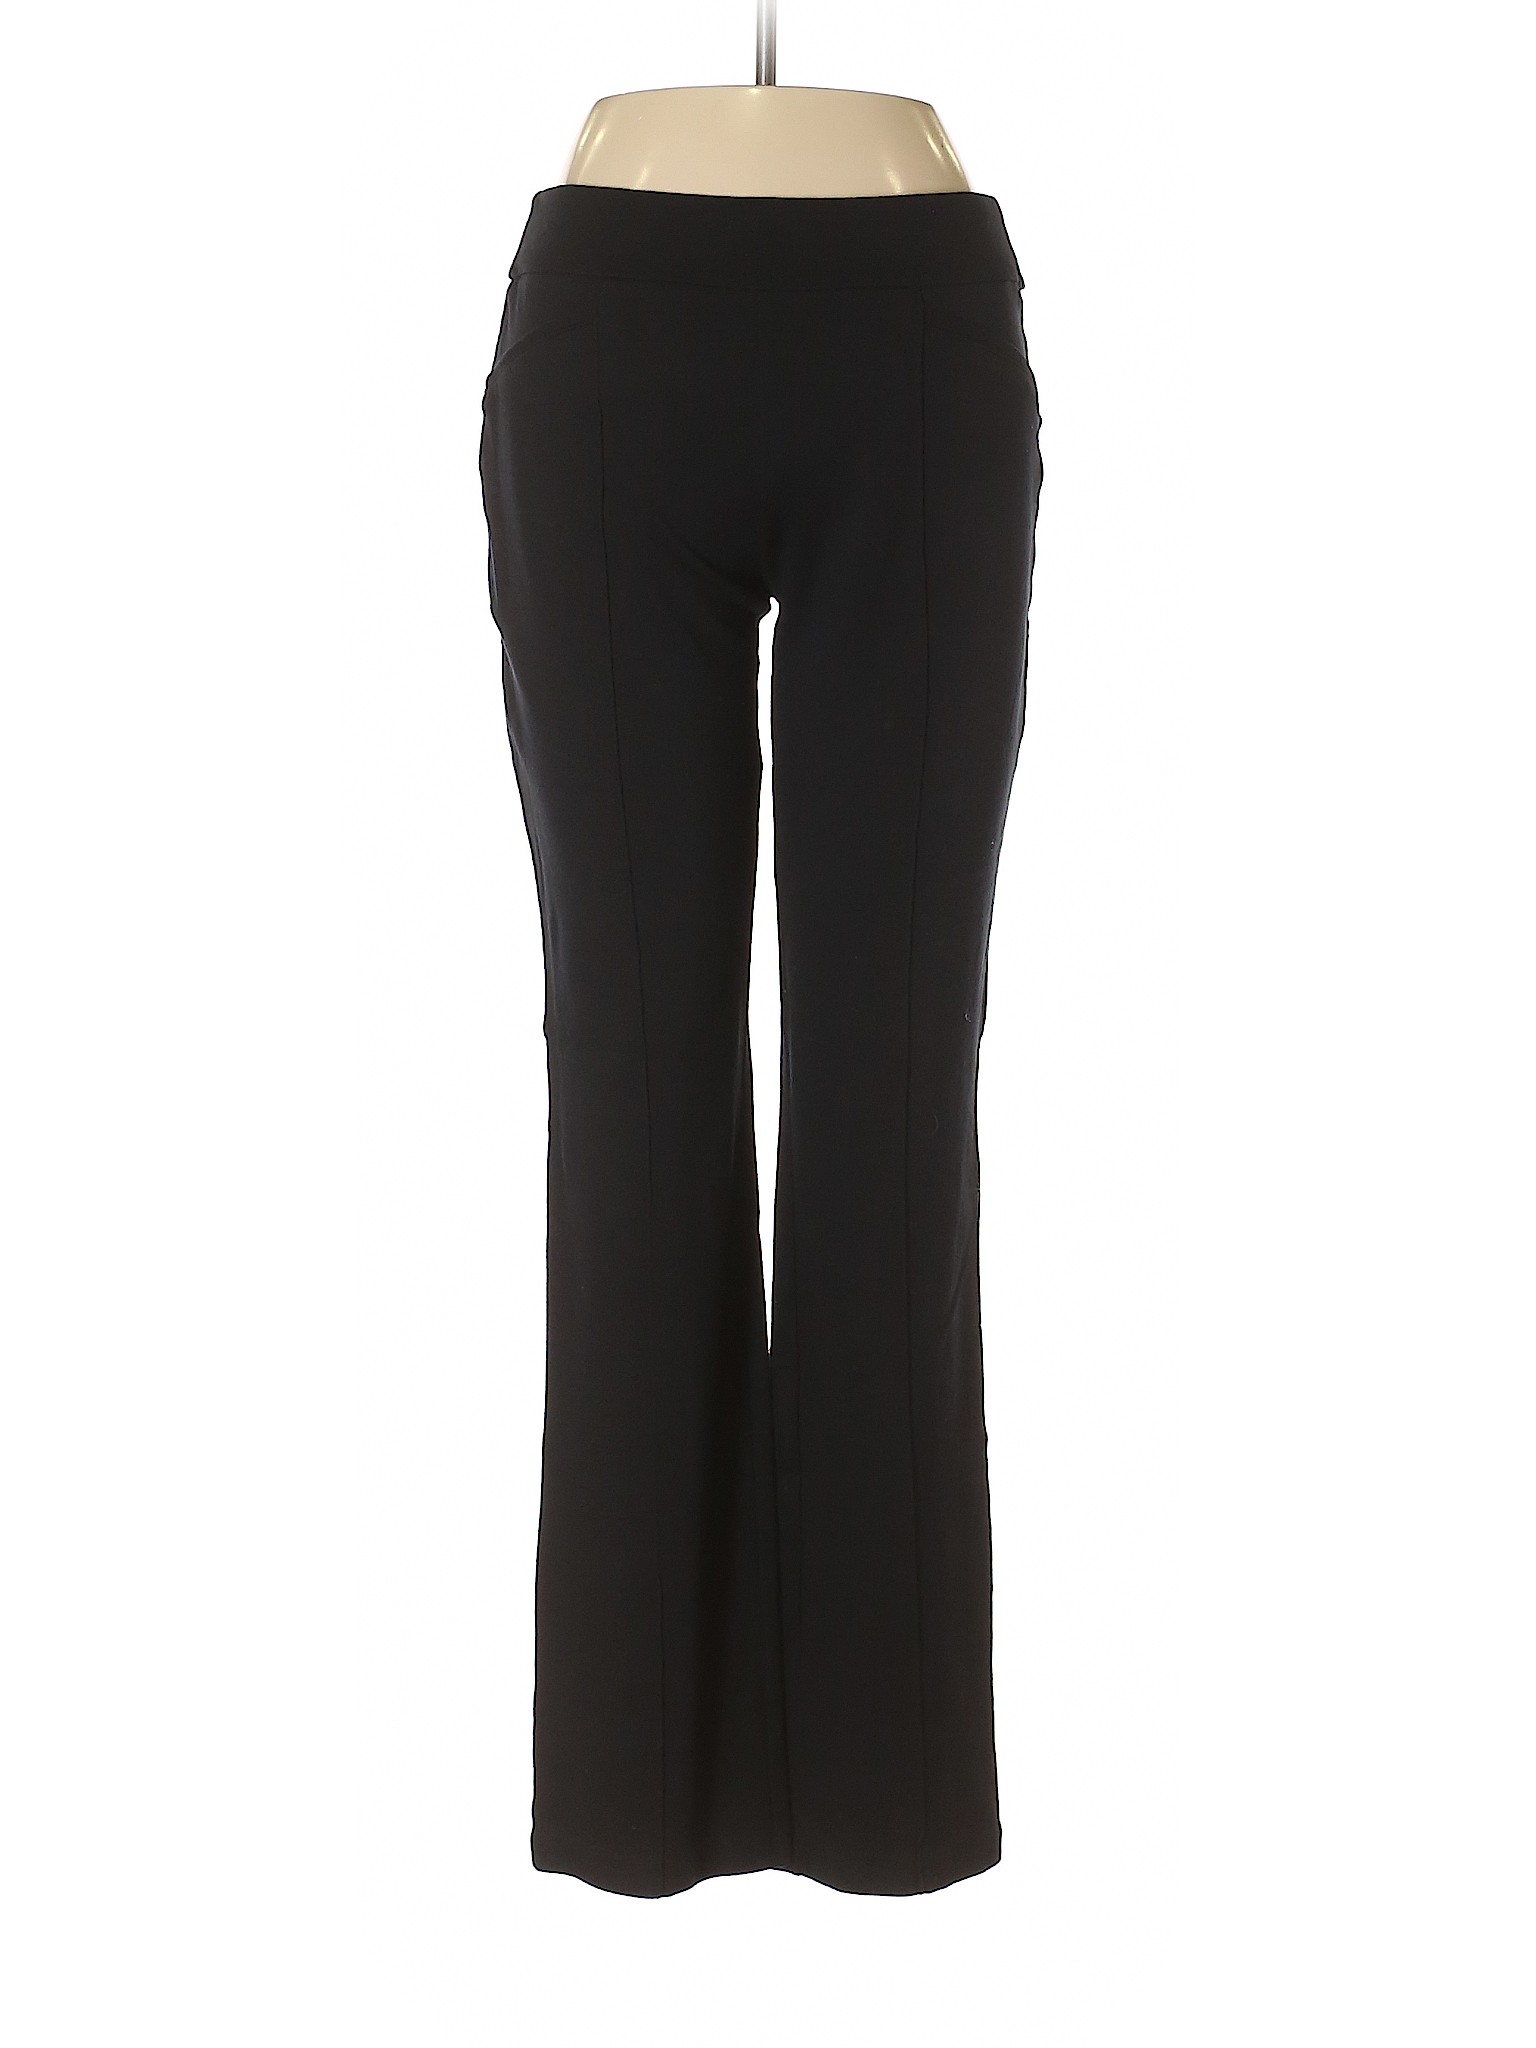 C established 1946 Women Black Casual Pants XS | eBay